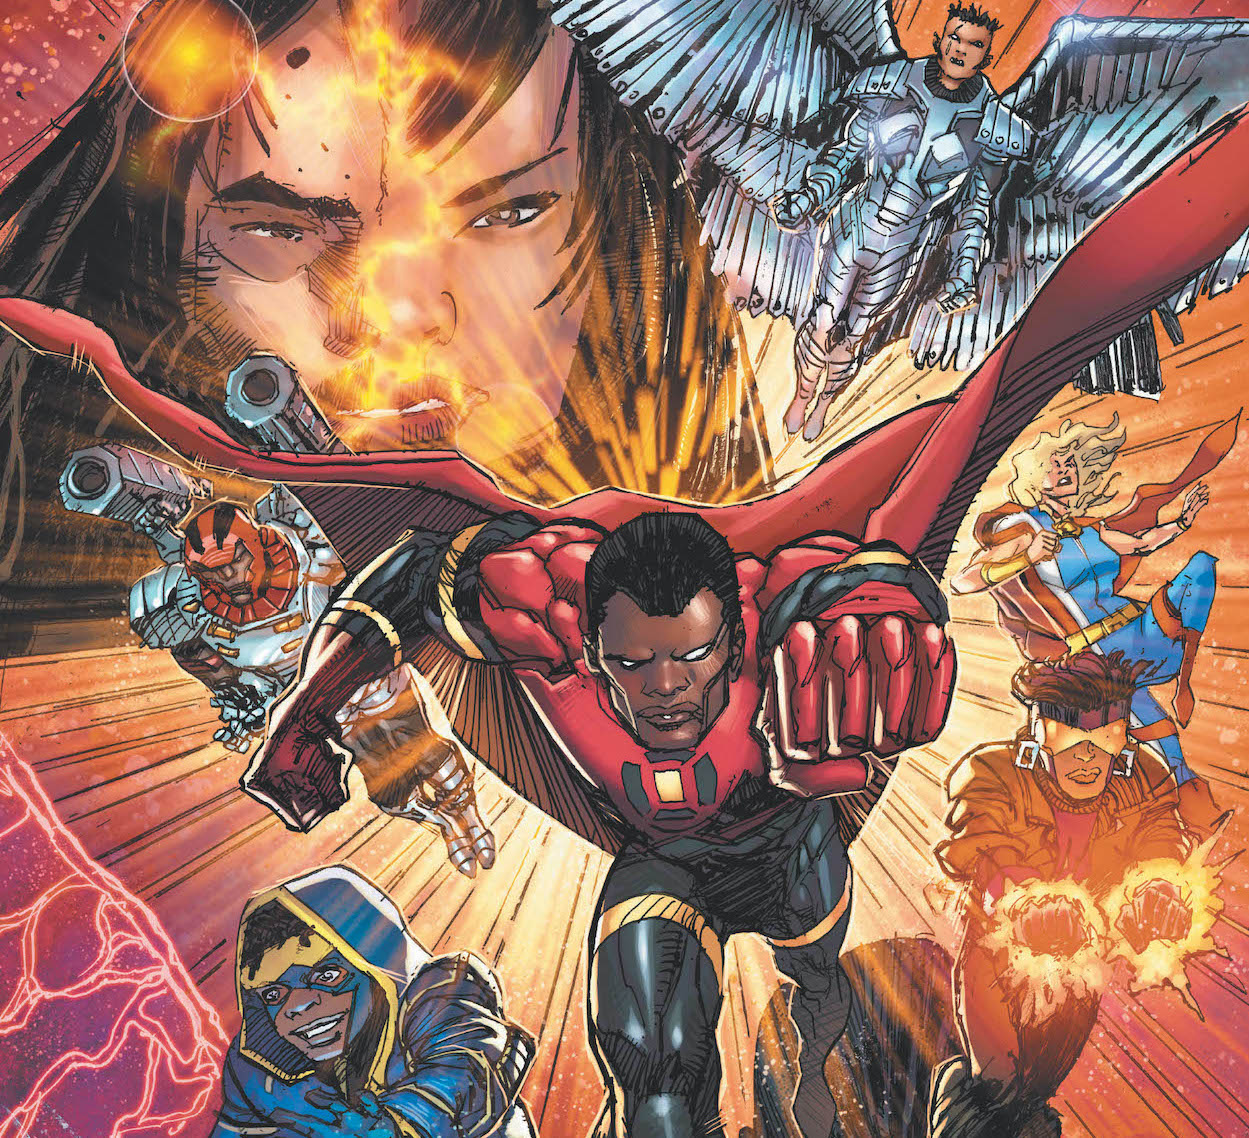 DC Comics reveals first wave of Milestone comics starting February 26th